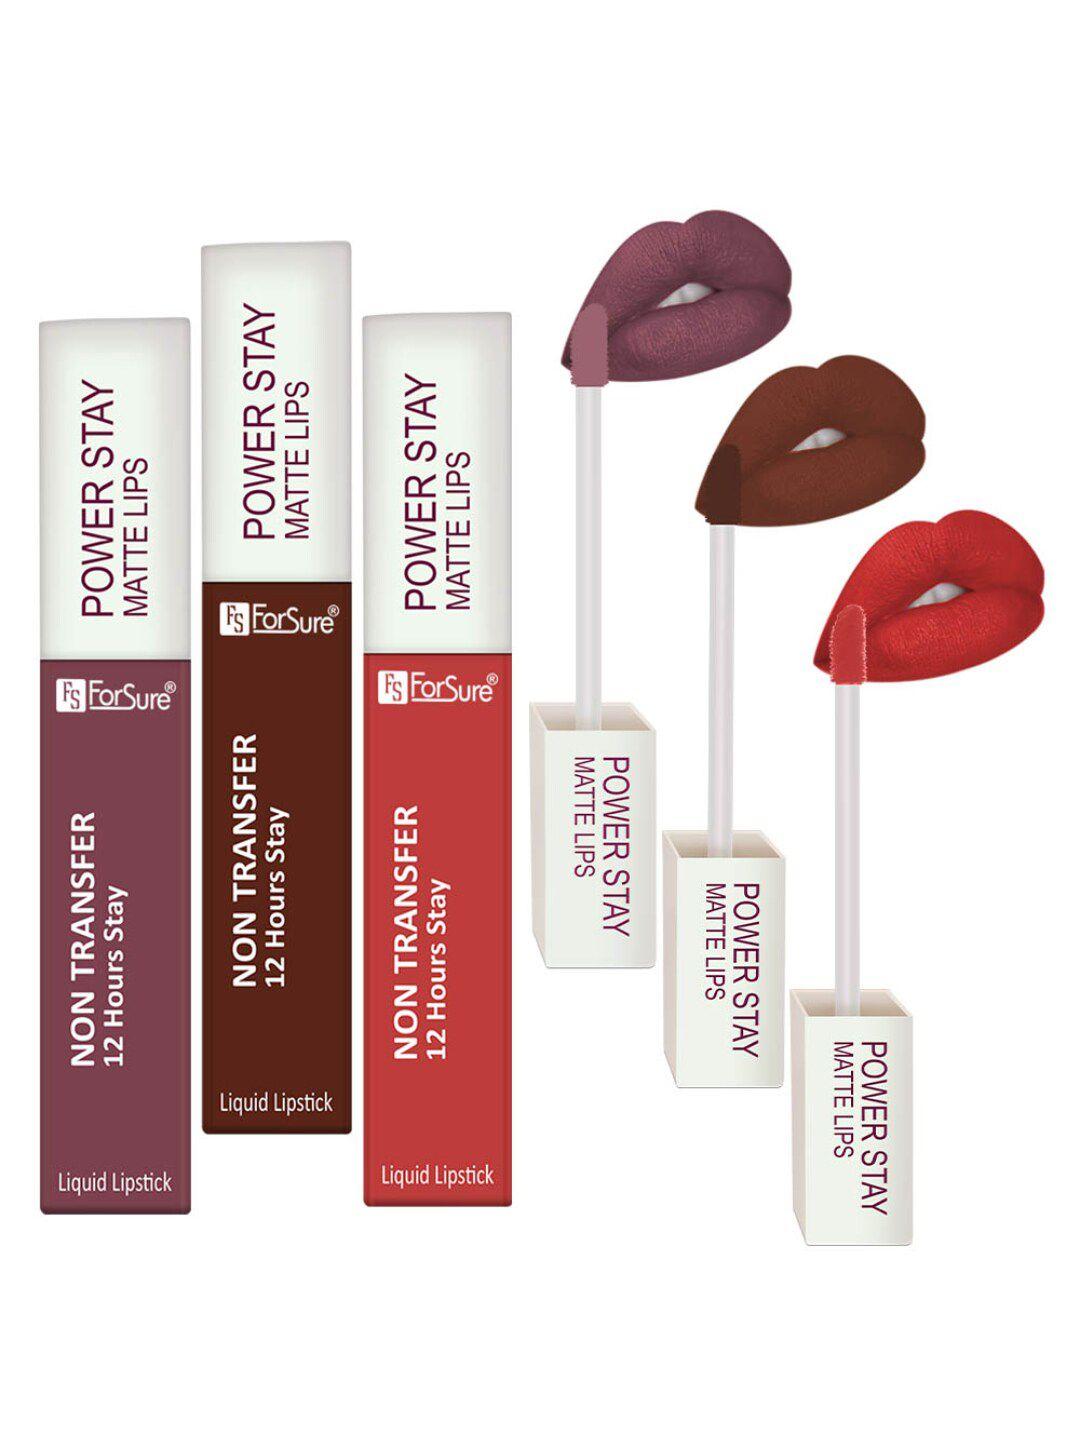 forsure power stay set of 3 matte lipsticks 4ml each-rose red 01+walnut brown 16+mauve 23